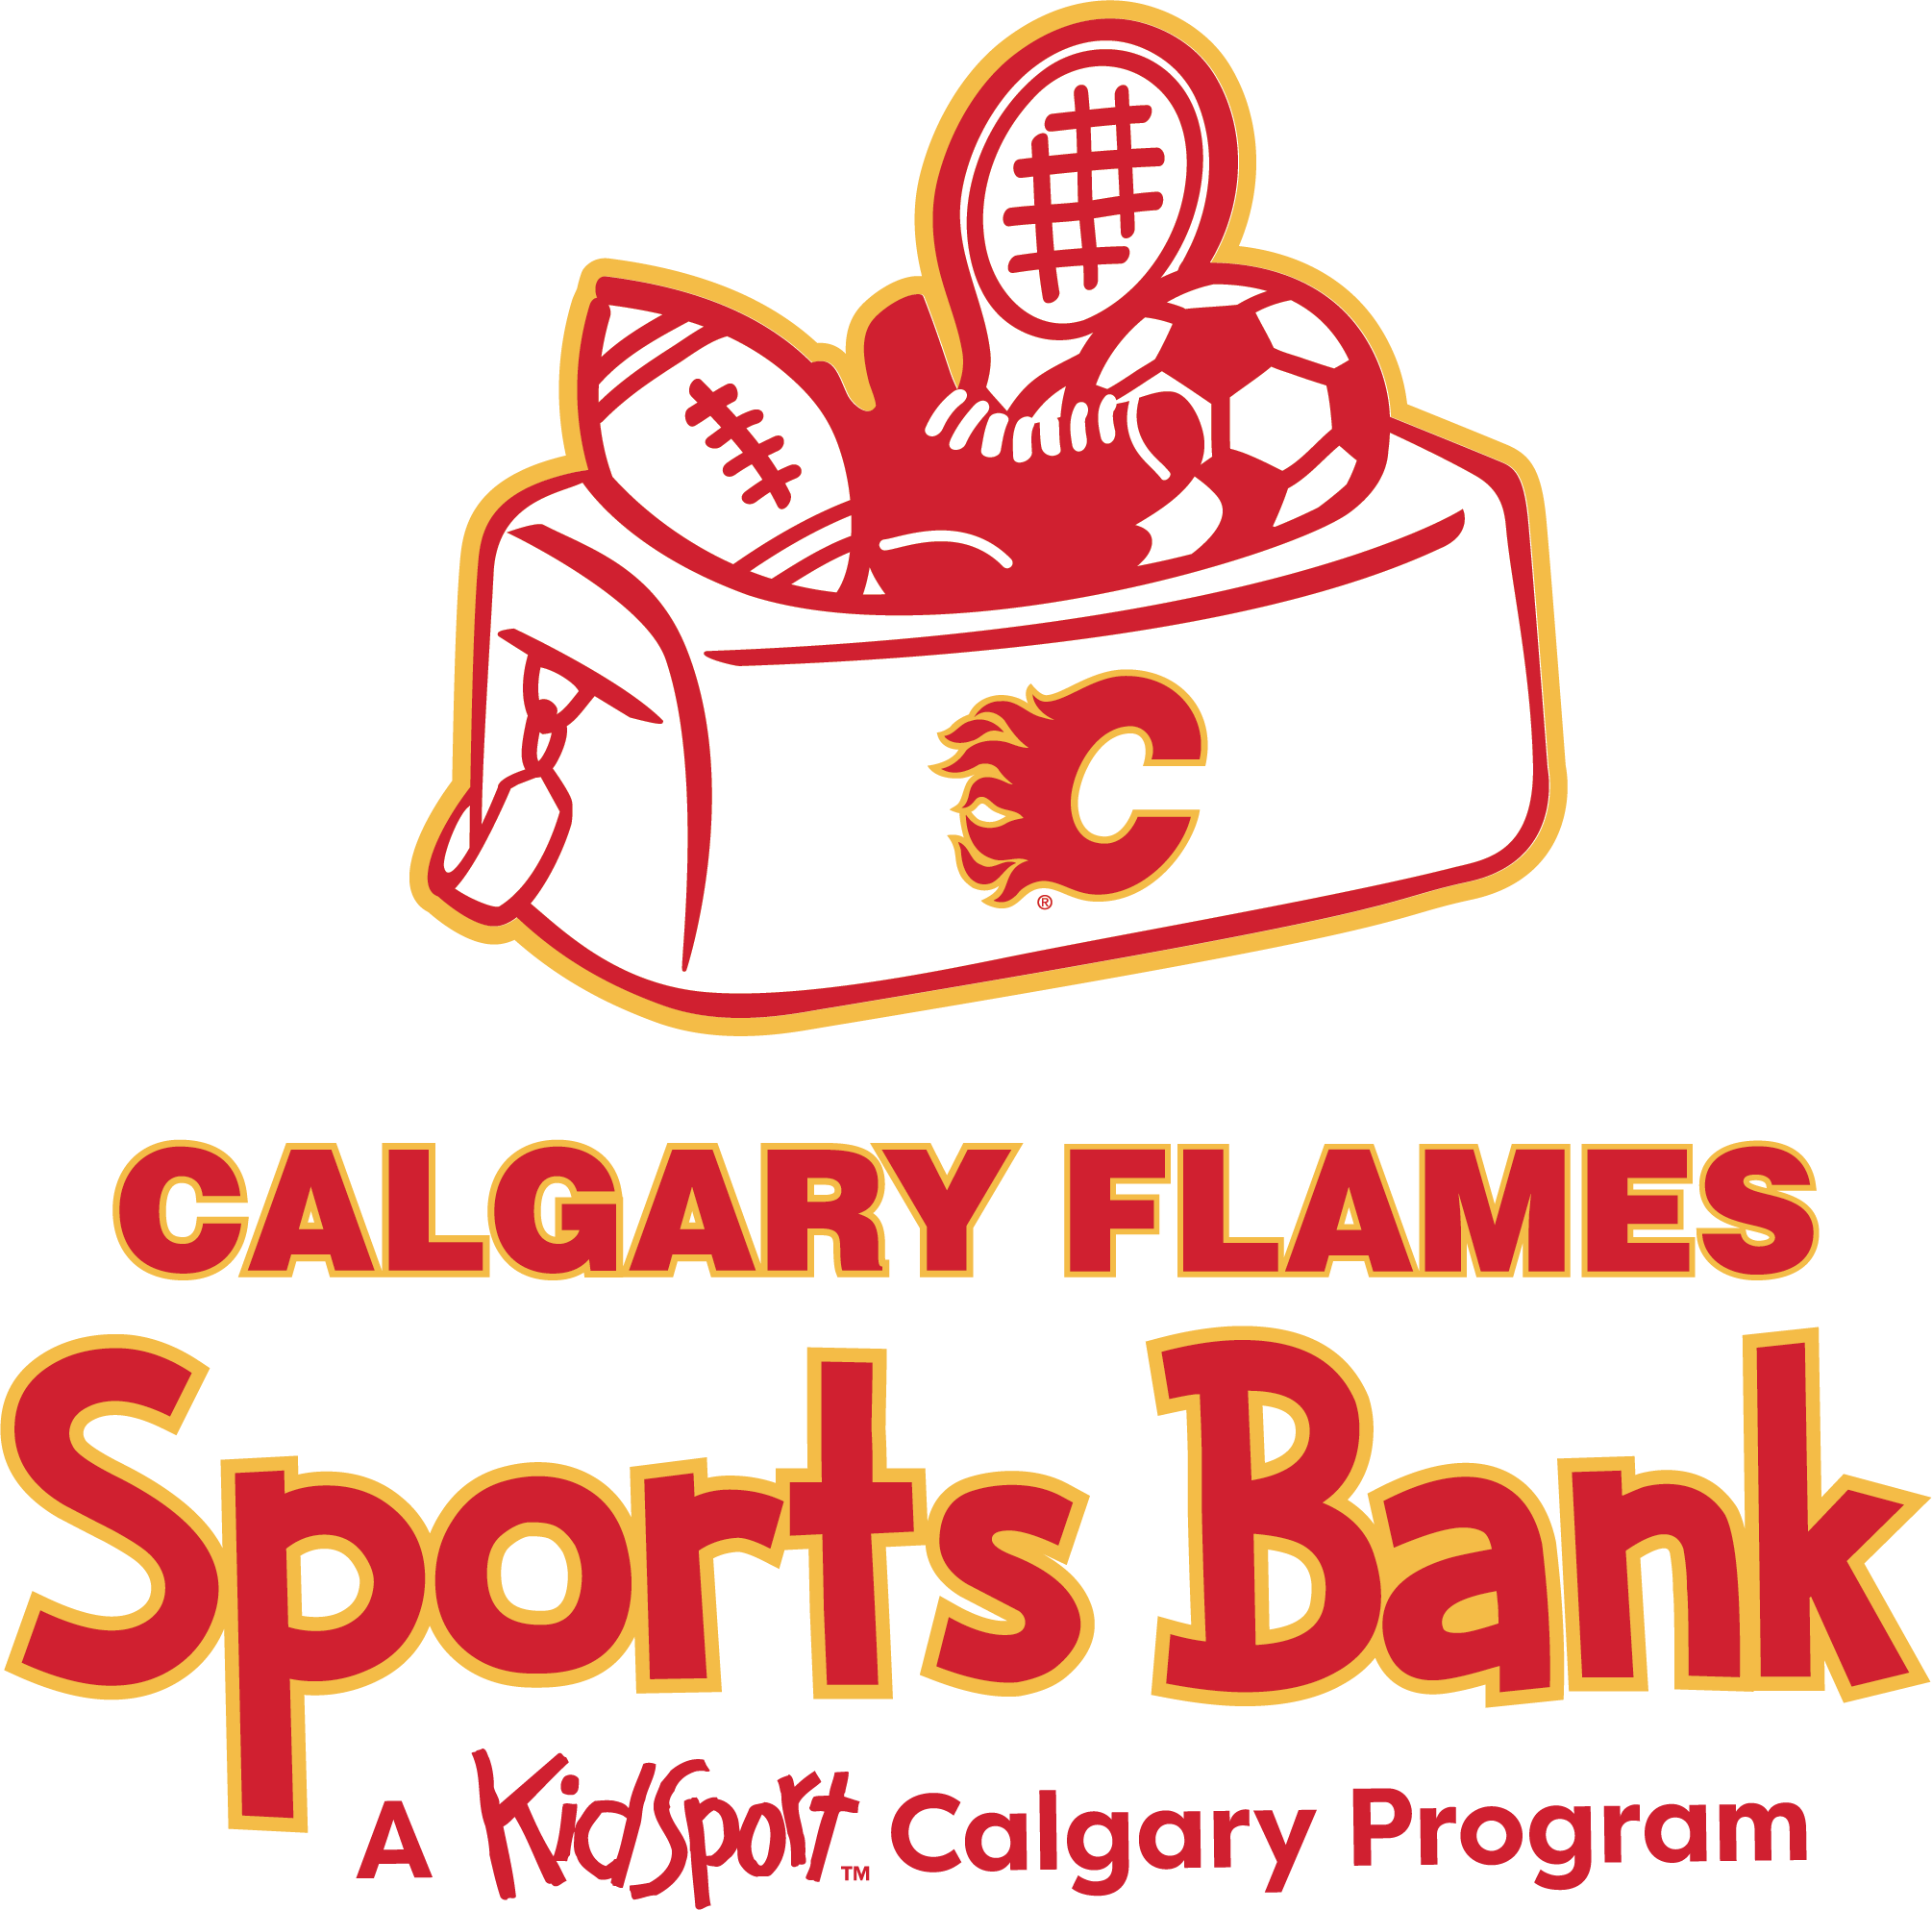 Flames Sports Bank